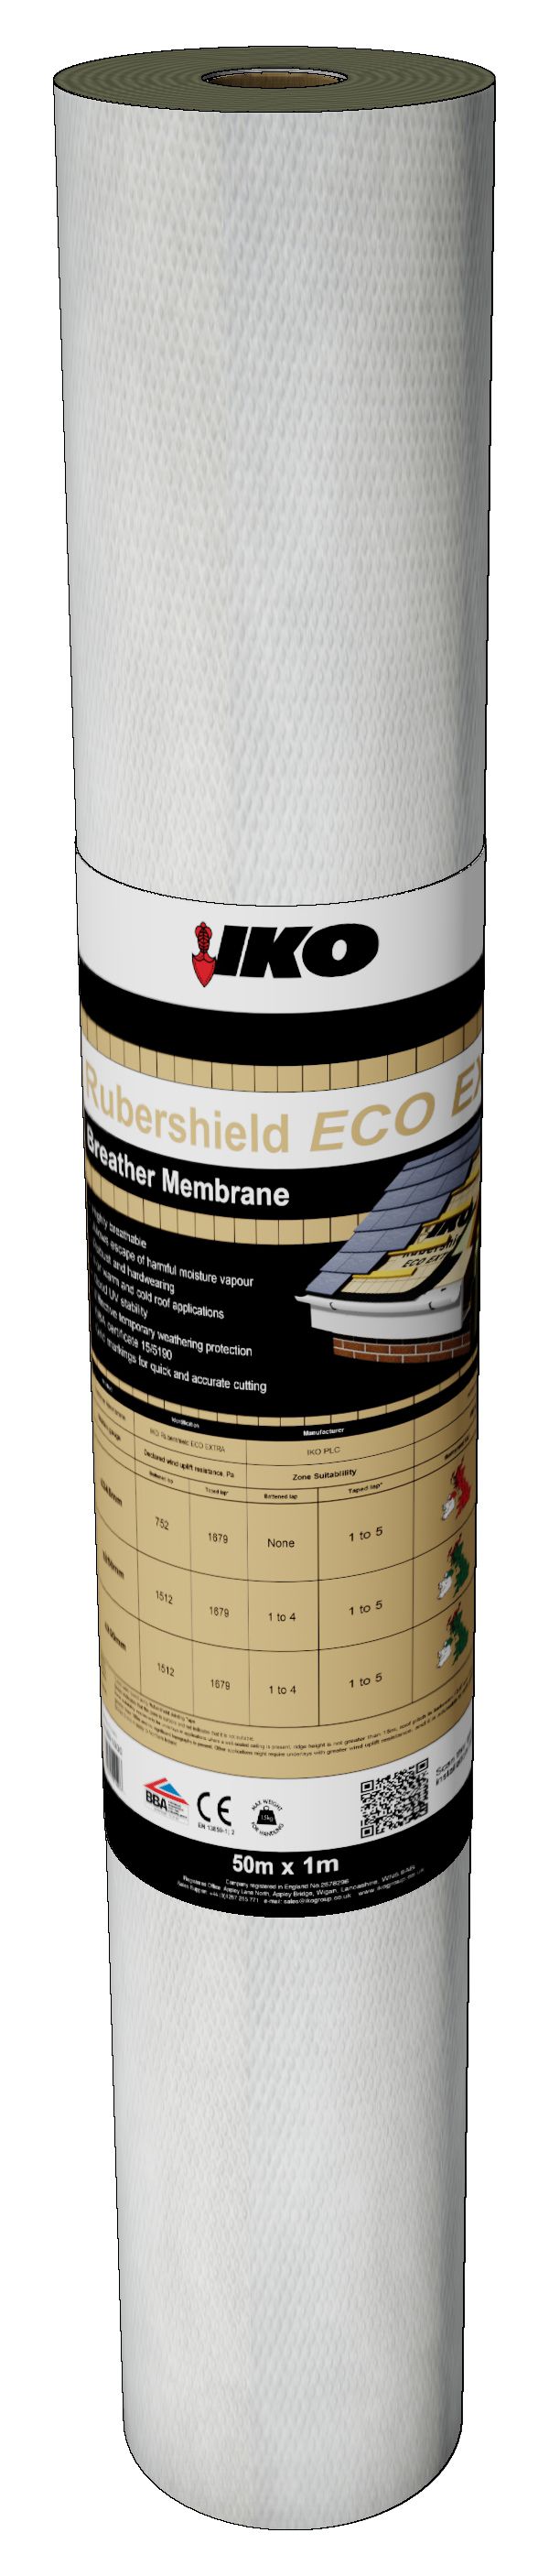 Image of IKO Rubershield Eco Extra 120g/sqm Roofing Membrane - 50 x 1m